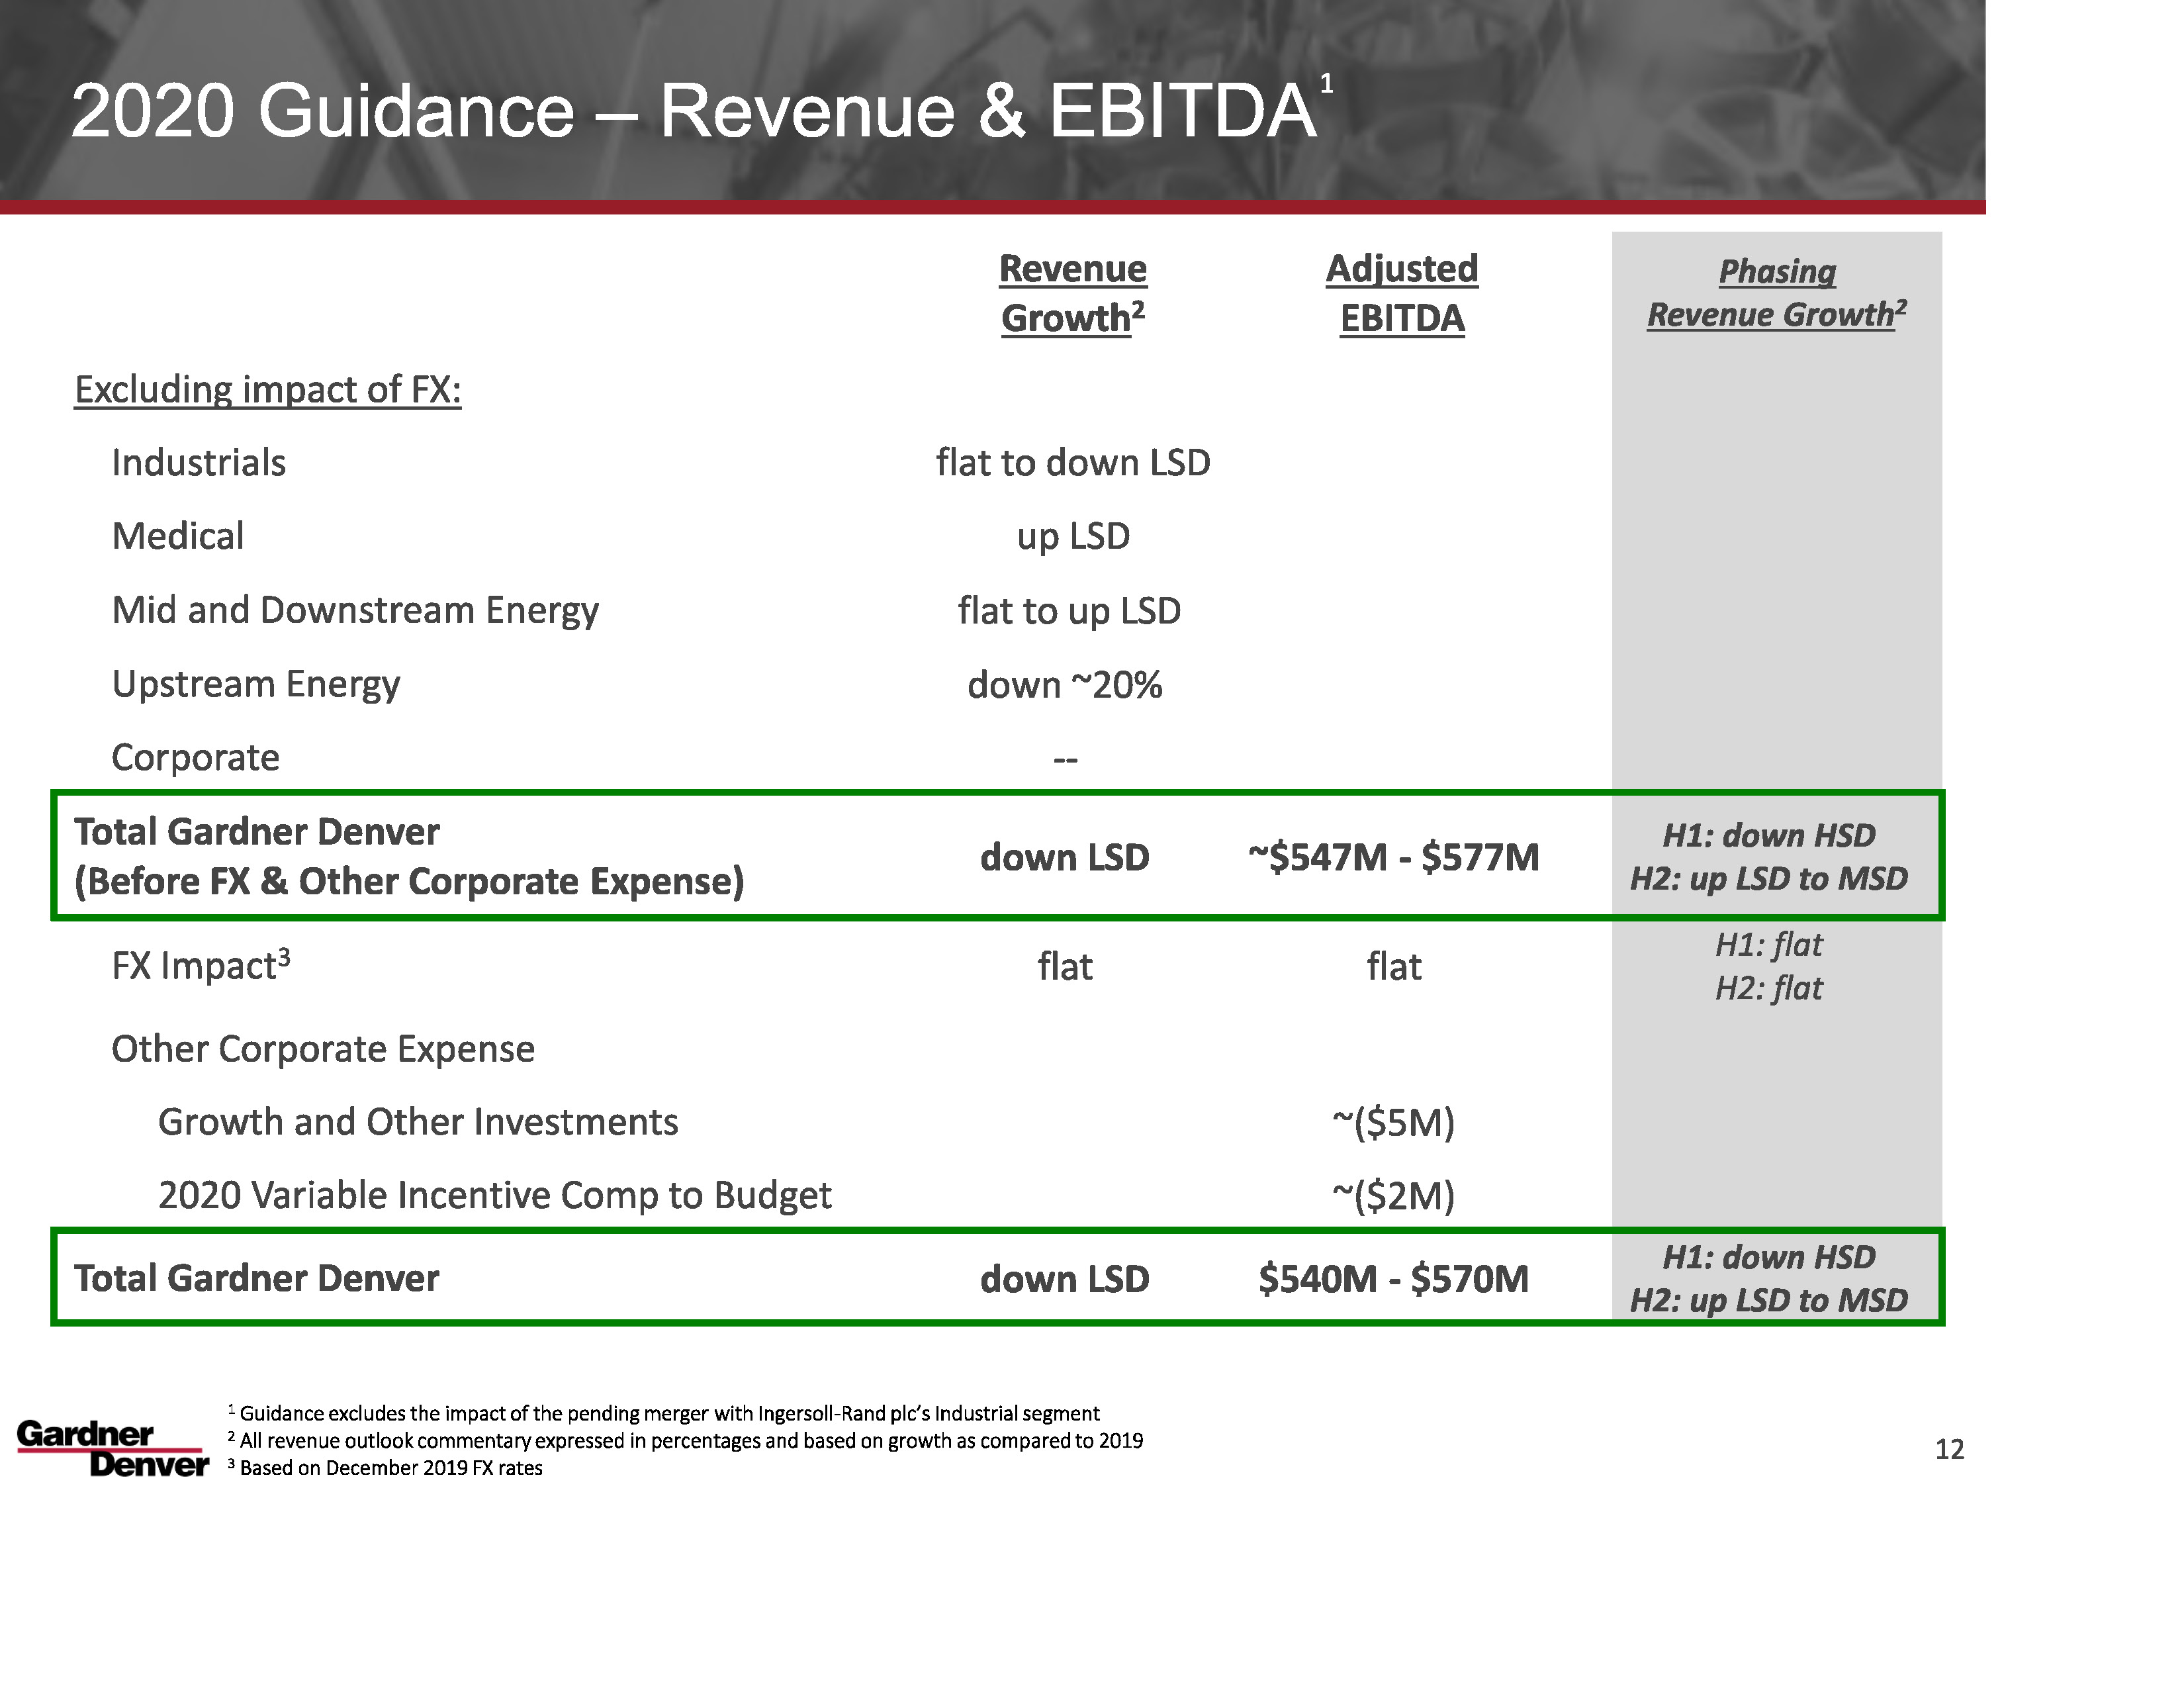 Ingersoll Rand 4Q Profits, EBITDA Grow Despite Lower Sales